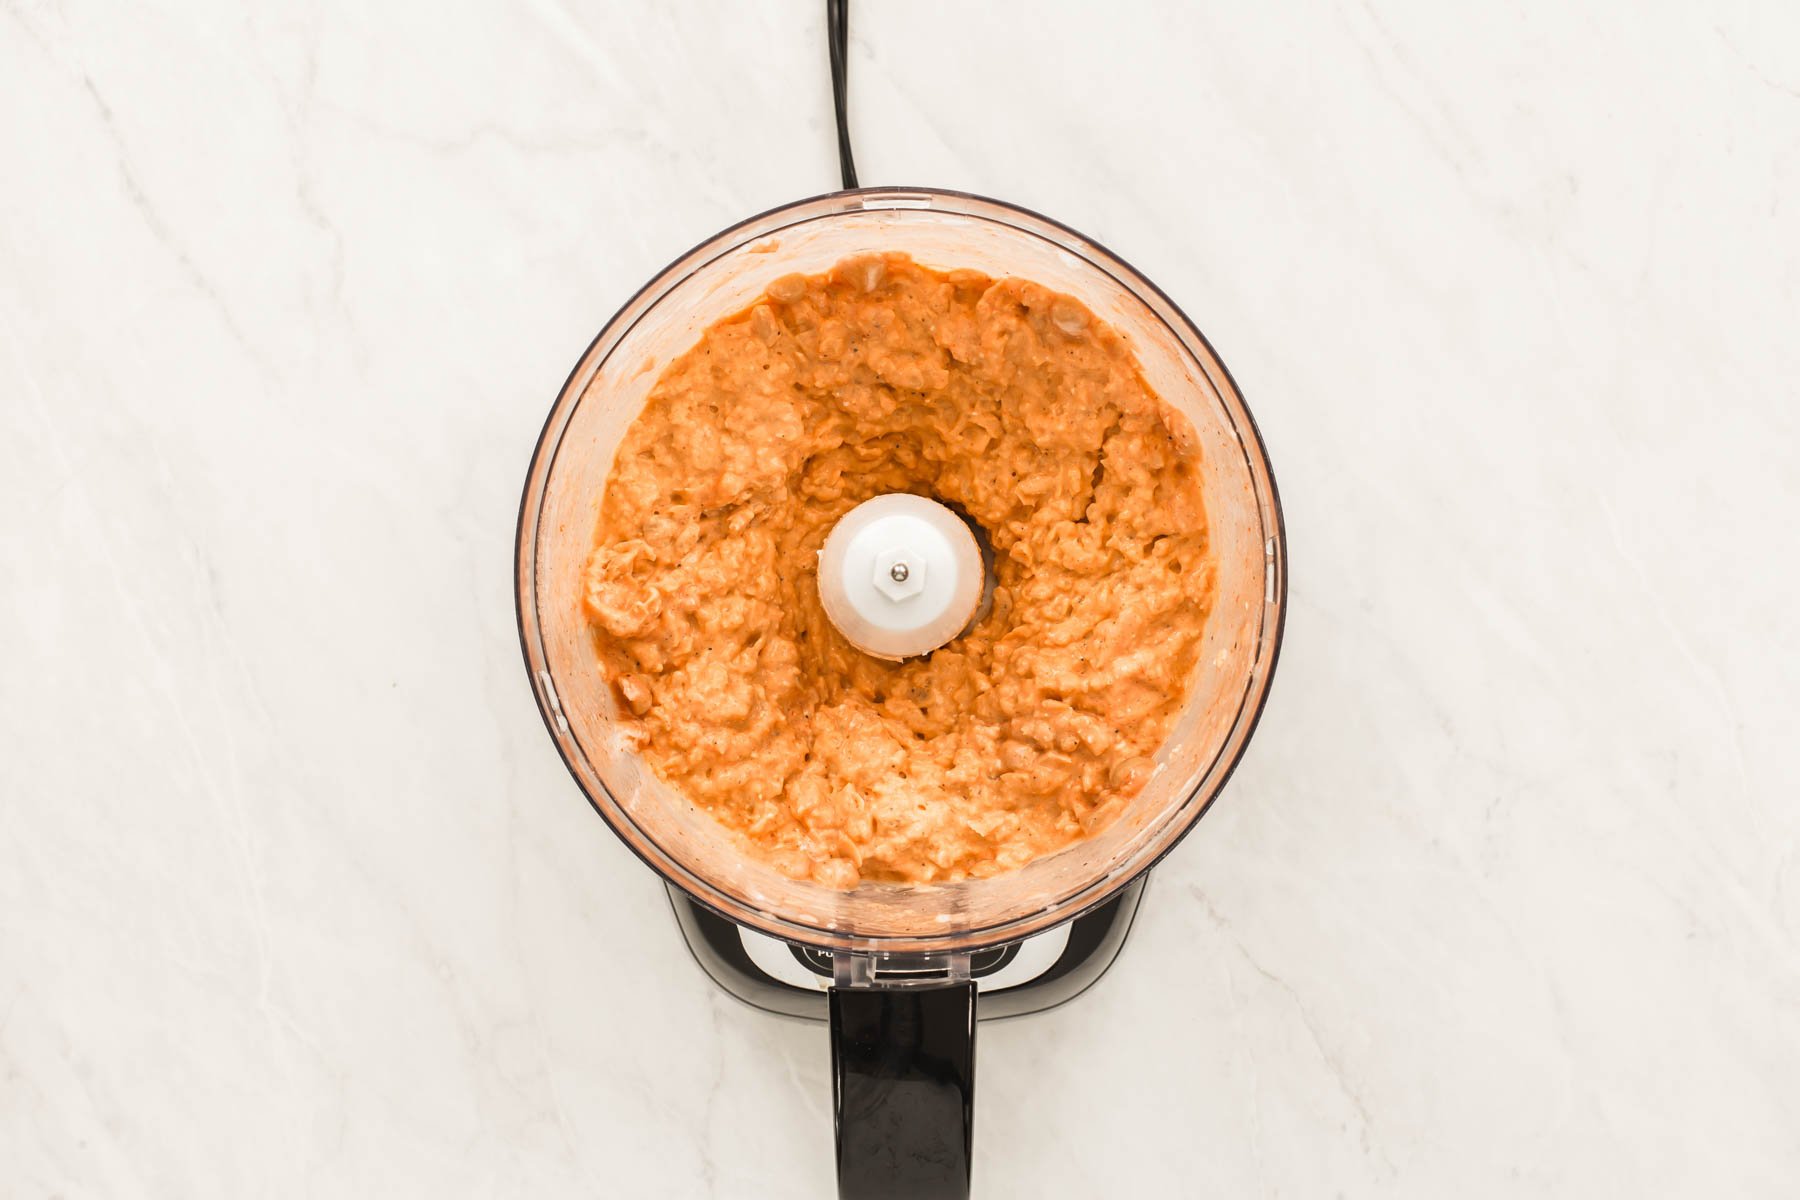 Open food processor bowl with creamy orange mixture inside.